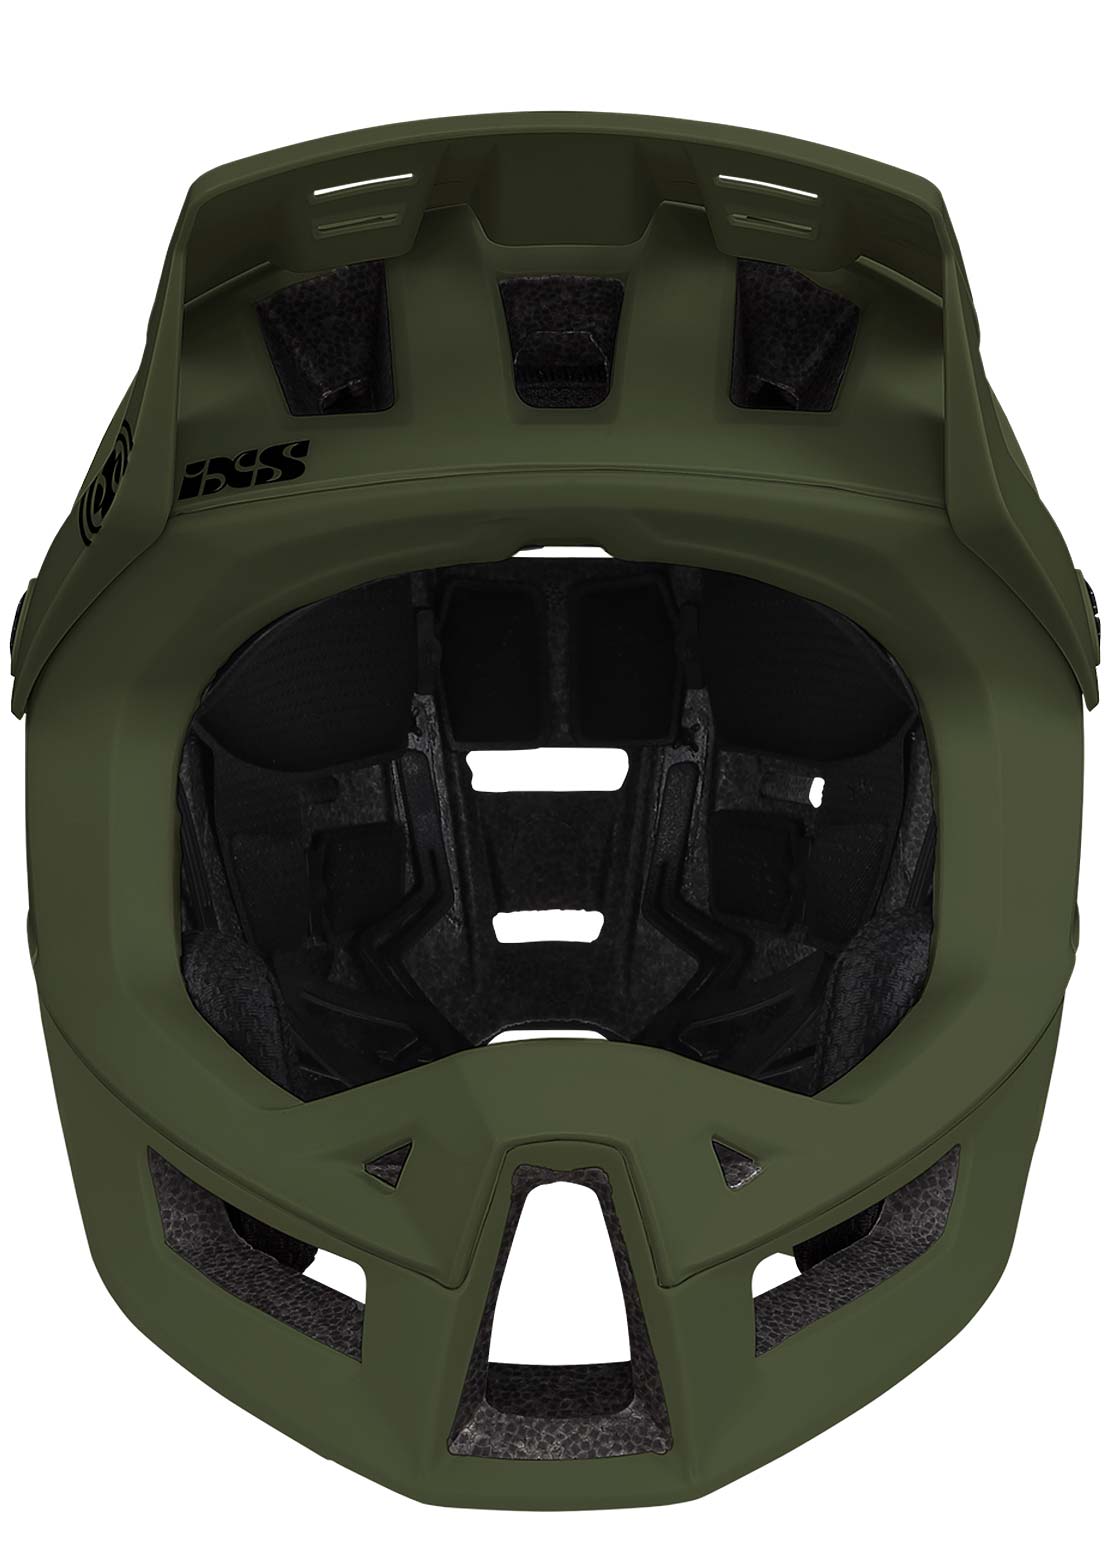 IXS Trigger FF Mips Full Face Helmet Olive